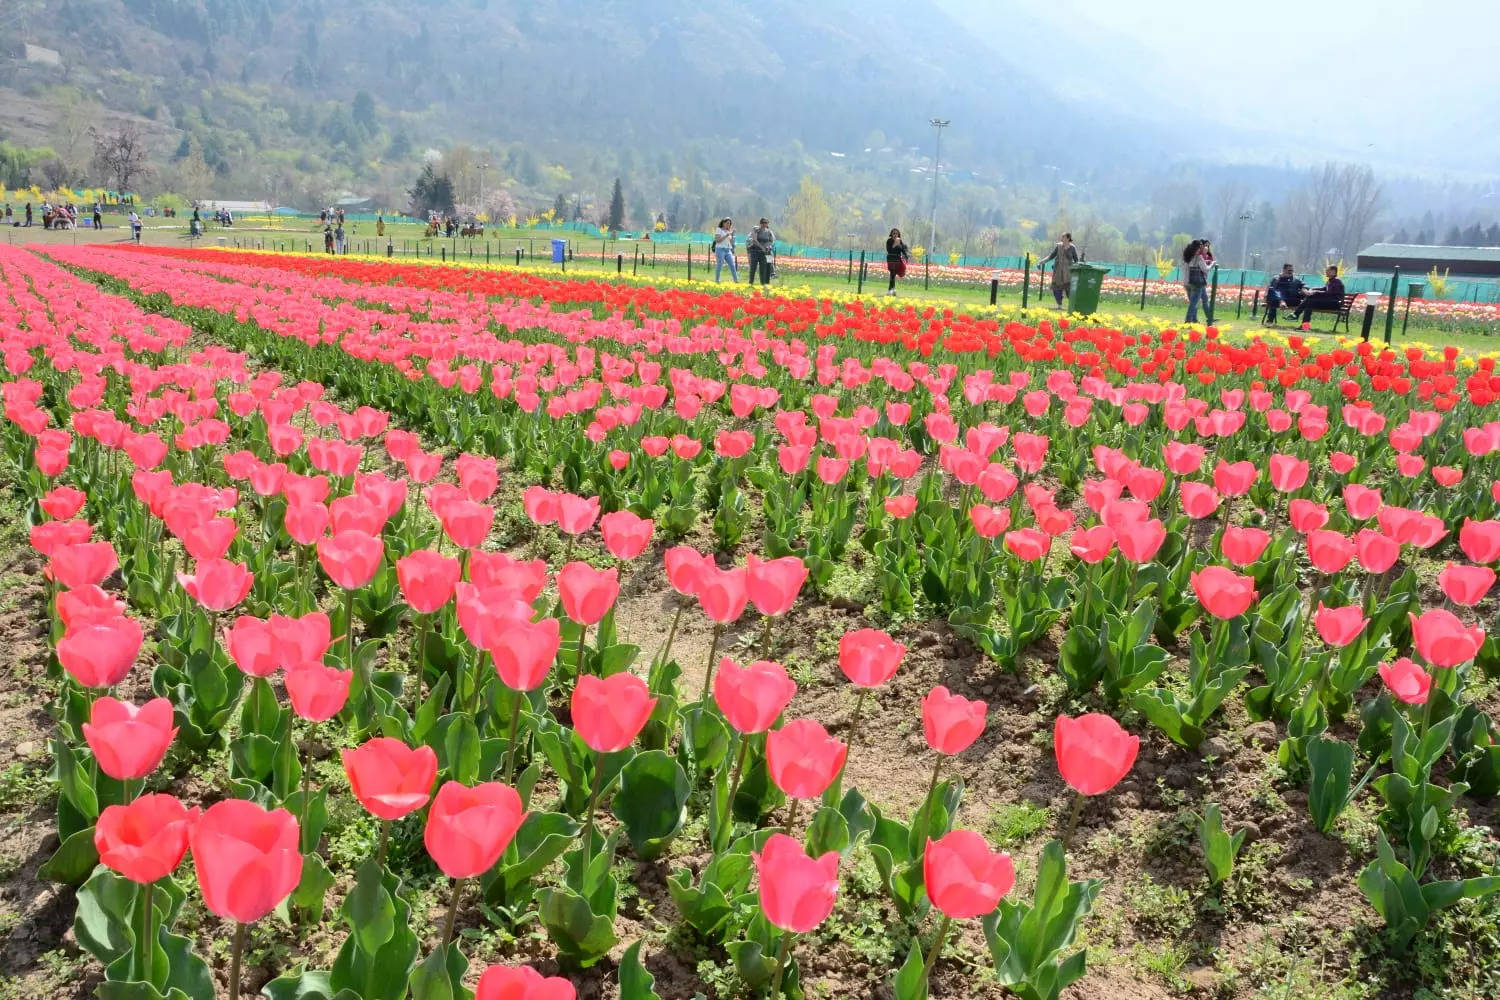 Asia's largest tulip garden reopens in Srinagar